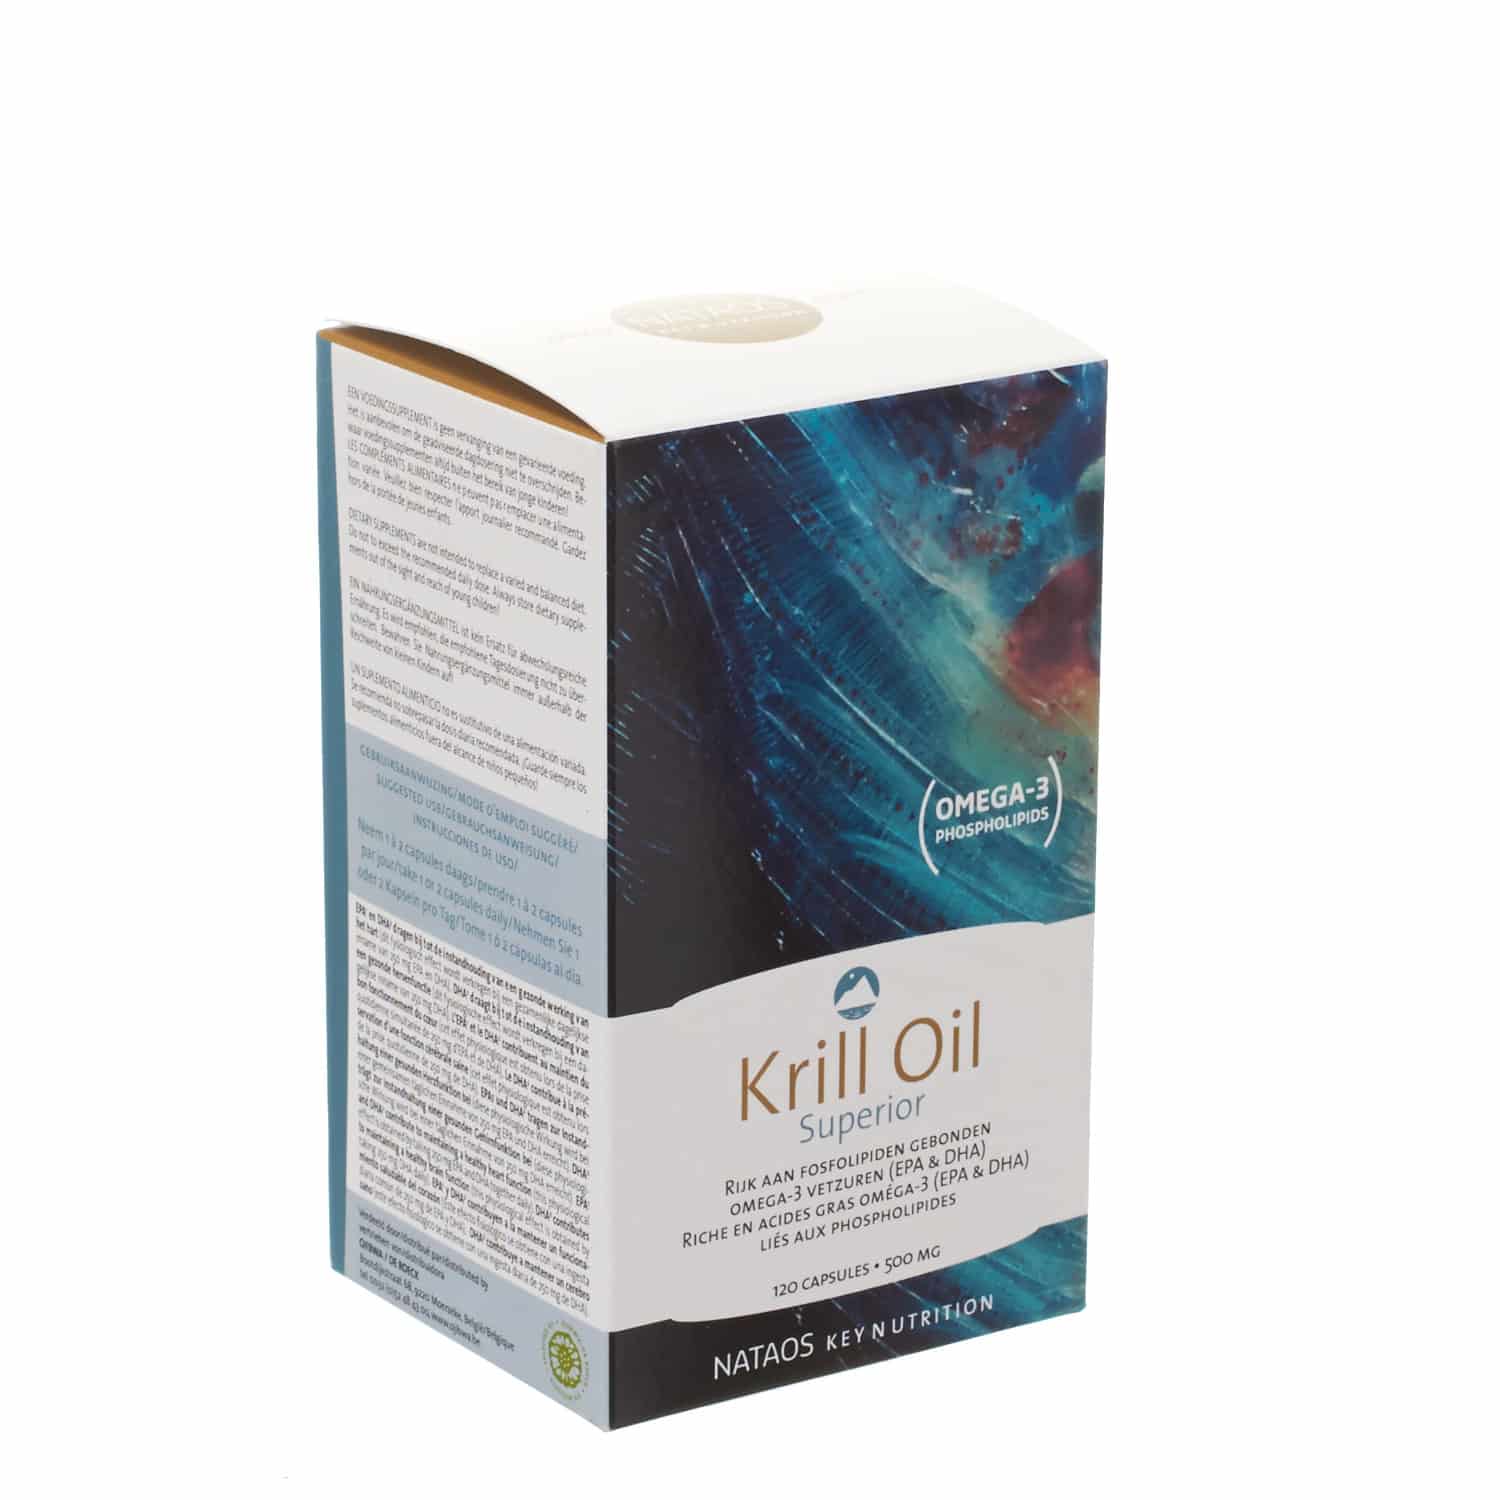 Nataos Krill Oil Superior